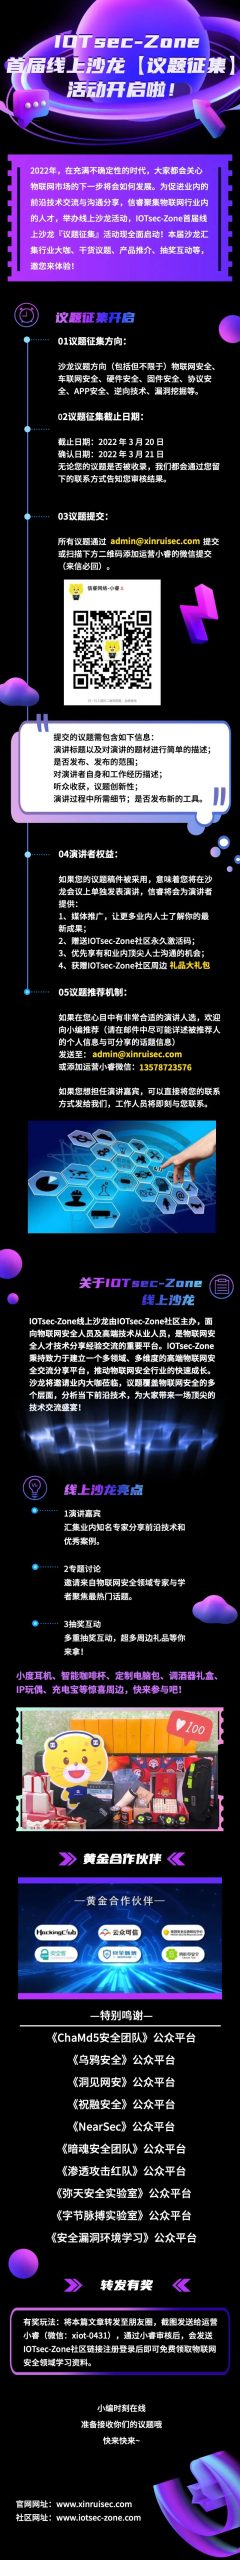 HackingClub助力IOTsec-Zone首届线上沙龙正式启动！